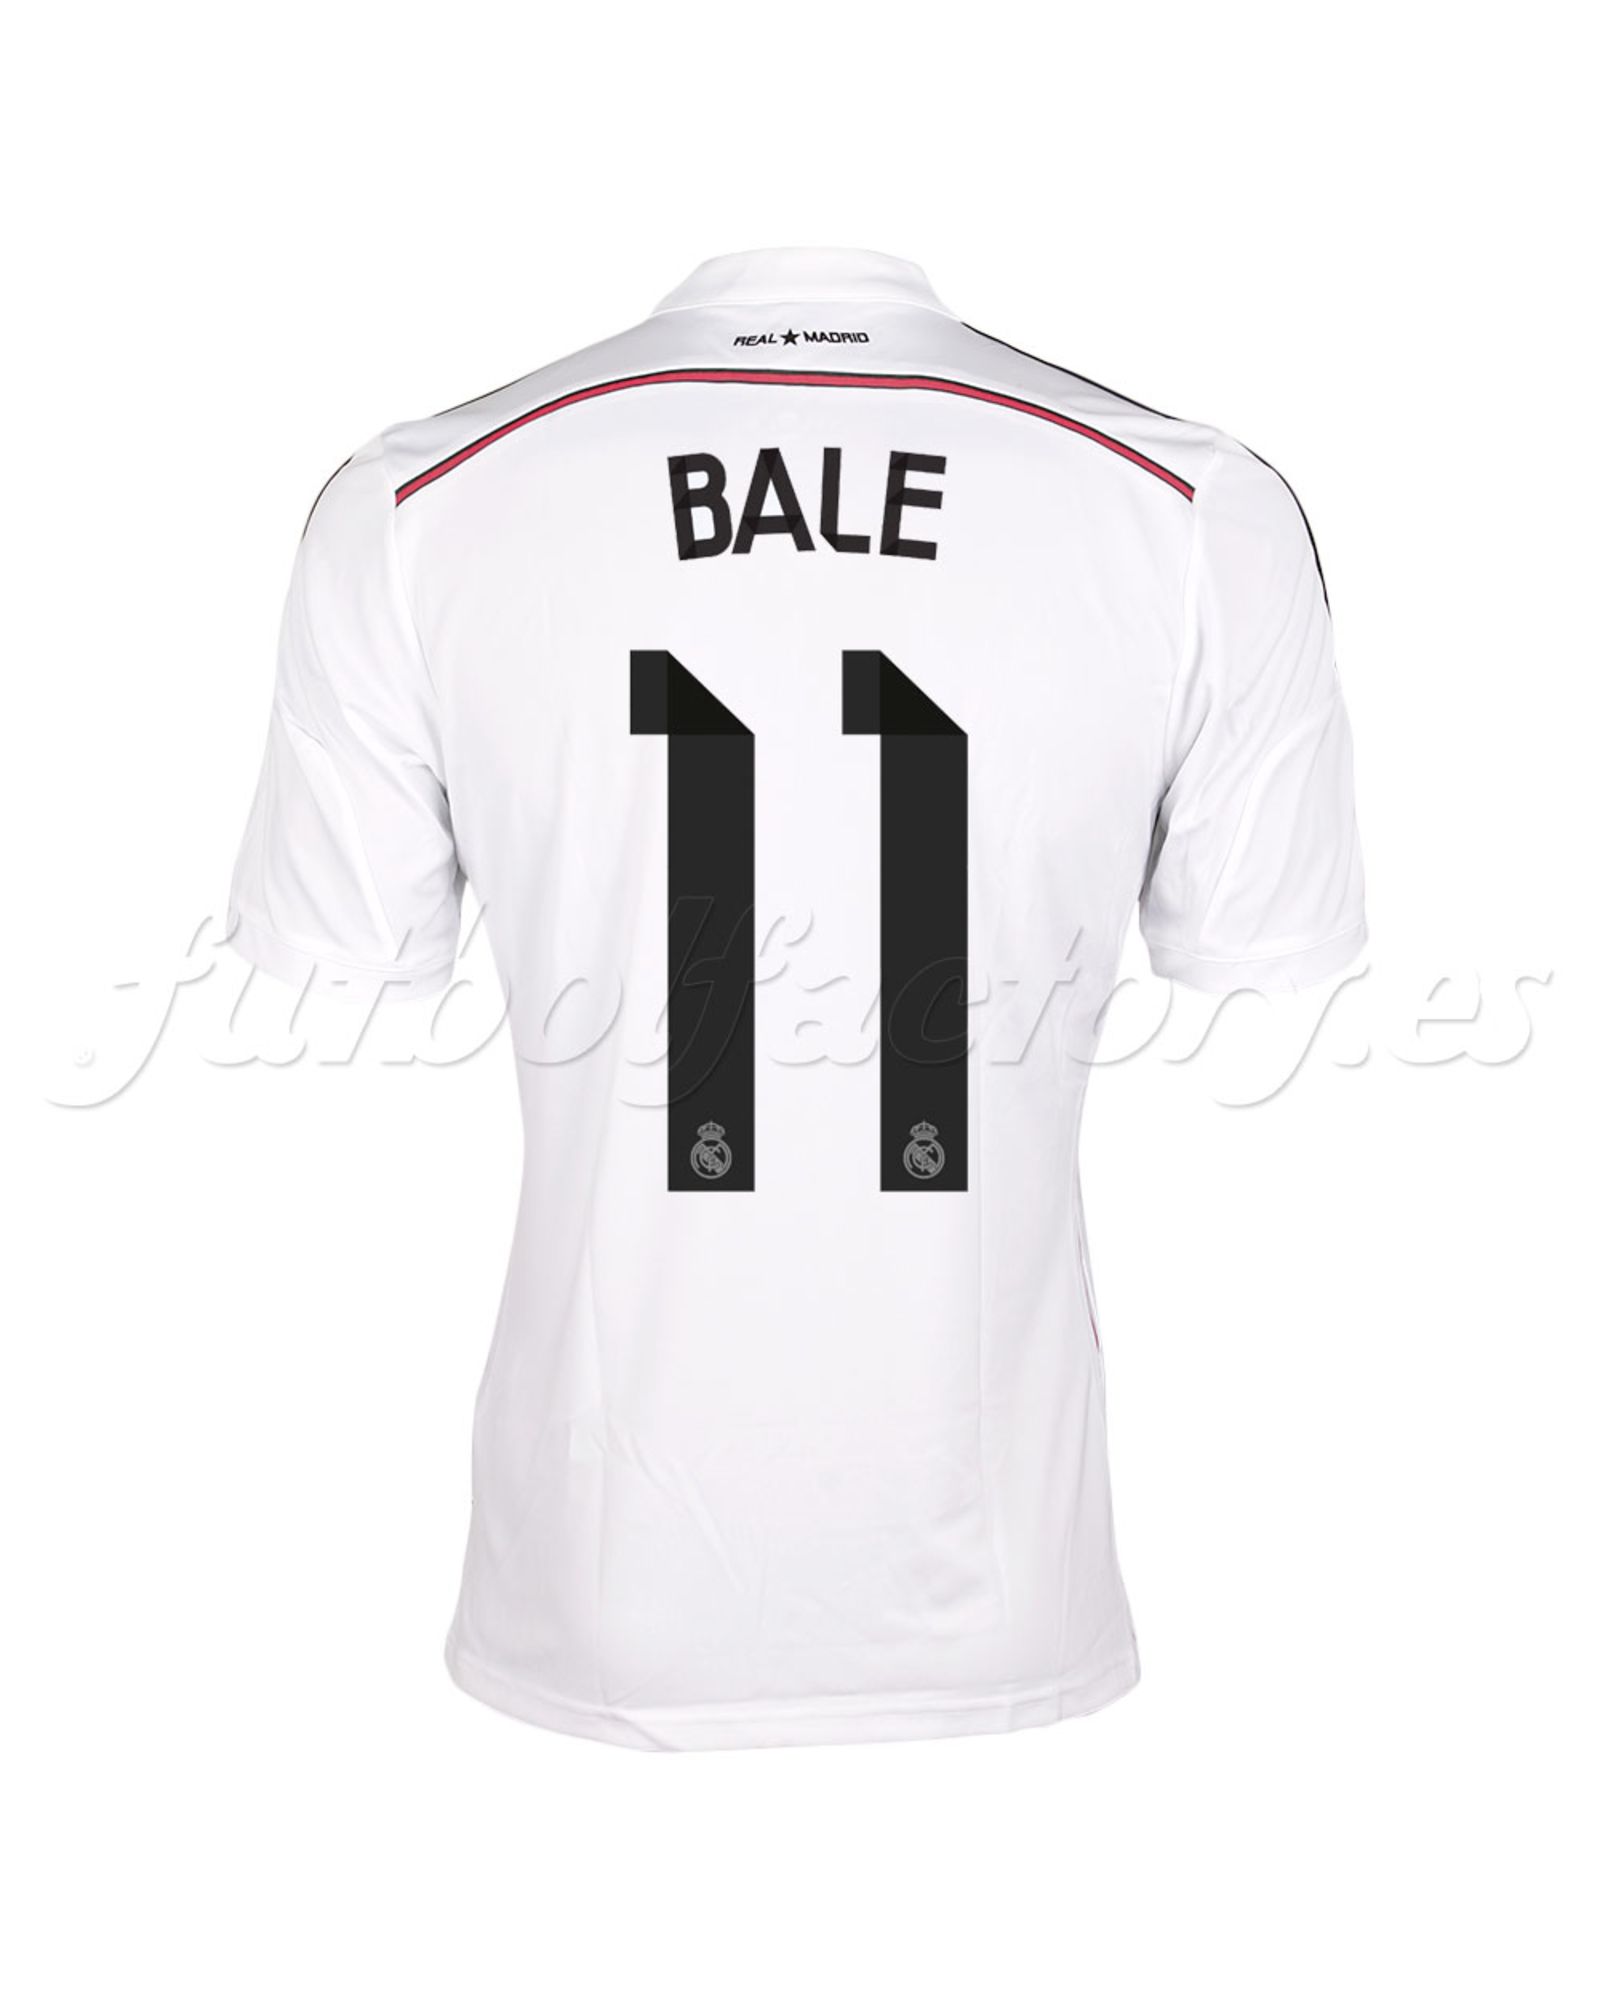 Camiseta Real Madrid  1ª  Bale  2014/2015 - Fútbol Factory